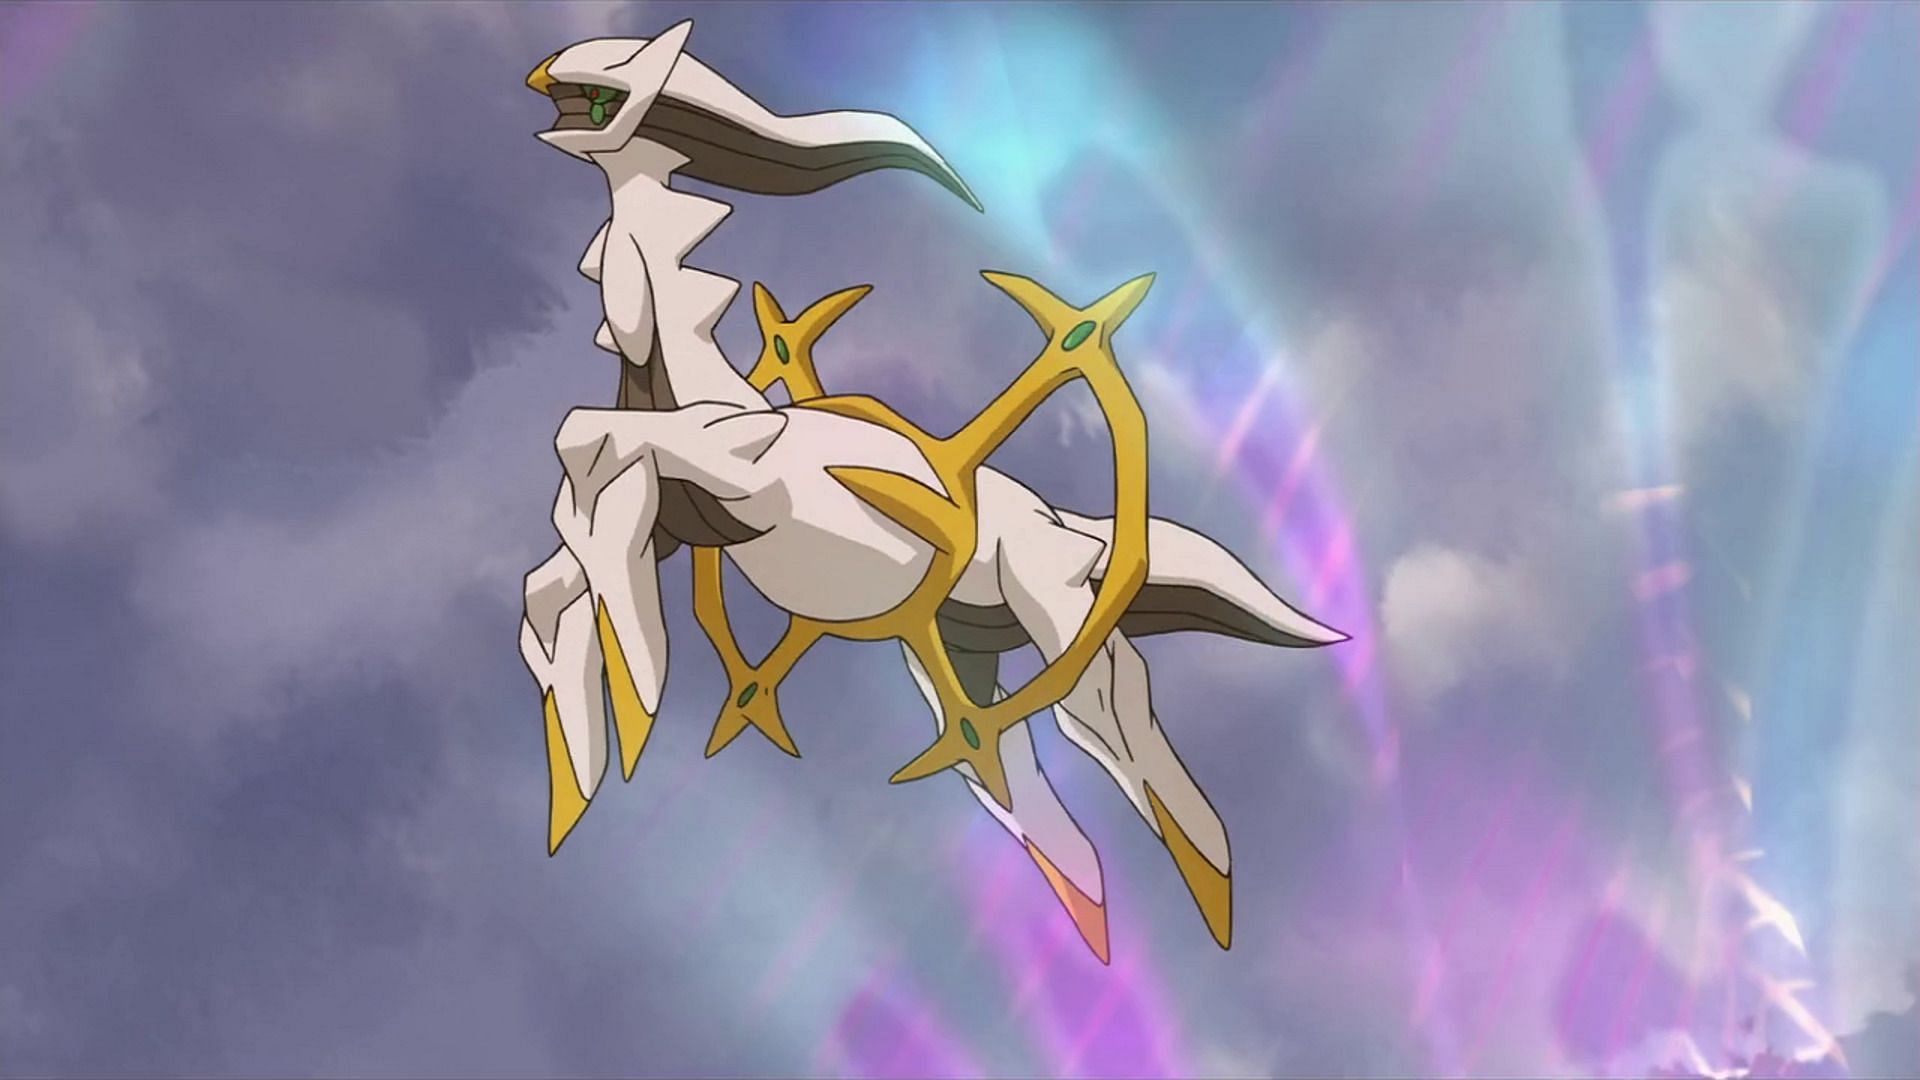 Arceus is the oldest creature in Pokemon lore